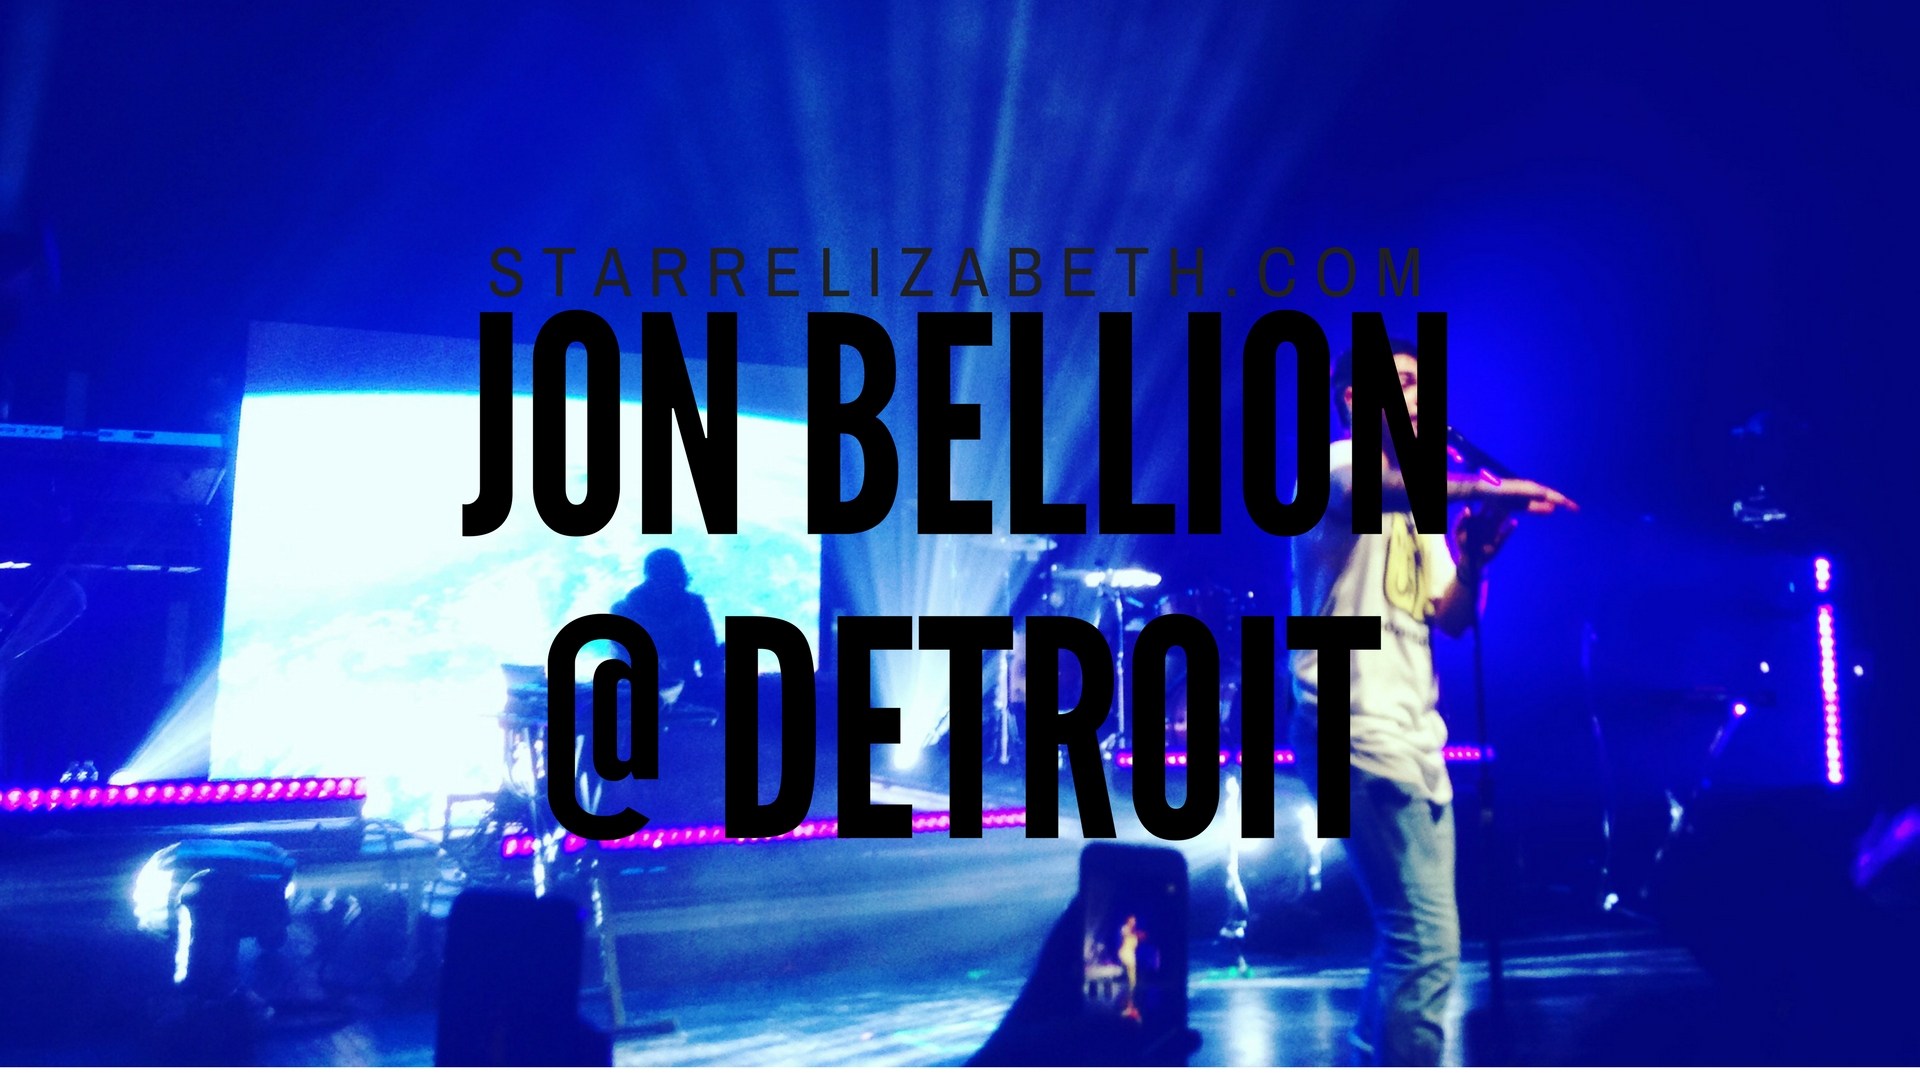 Jon Bellion's Human Connection Tour Pt Iii Detroit - Stage , HD Wallpaper & Backgrounds